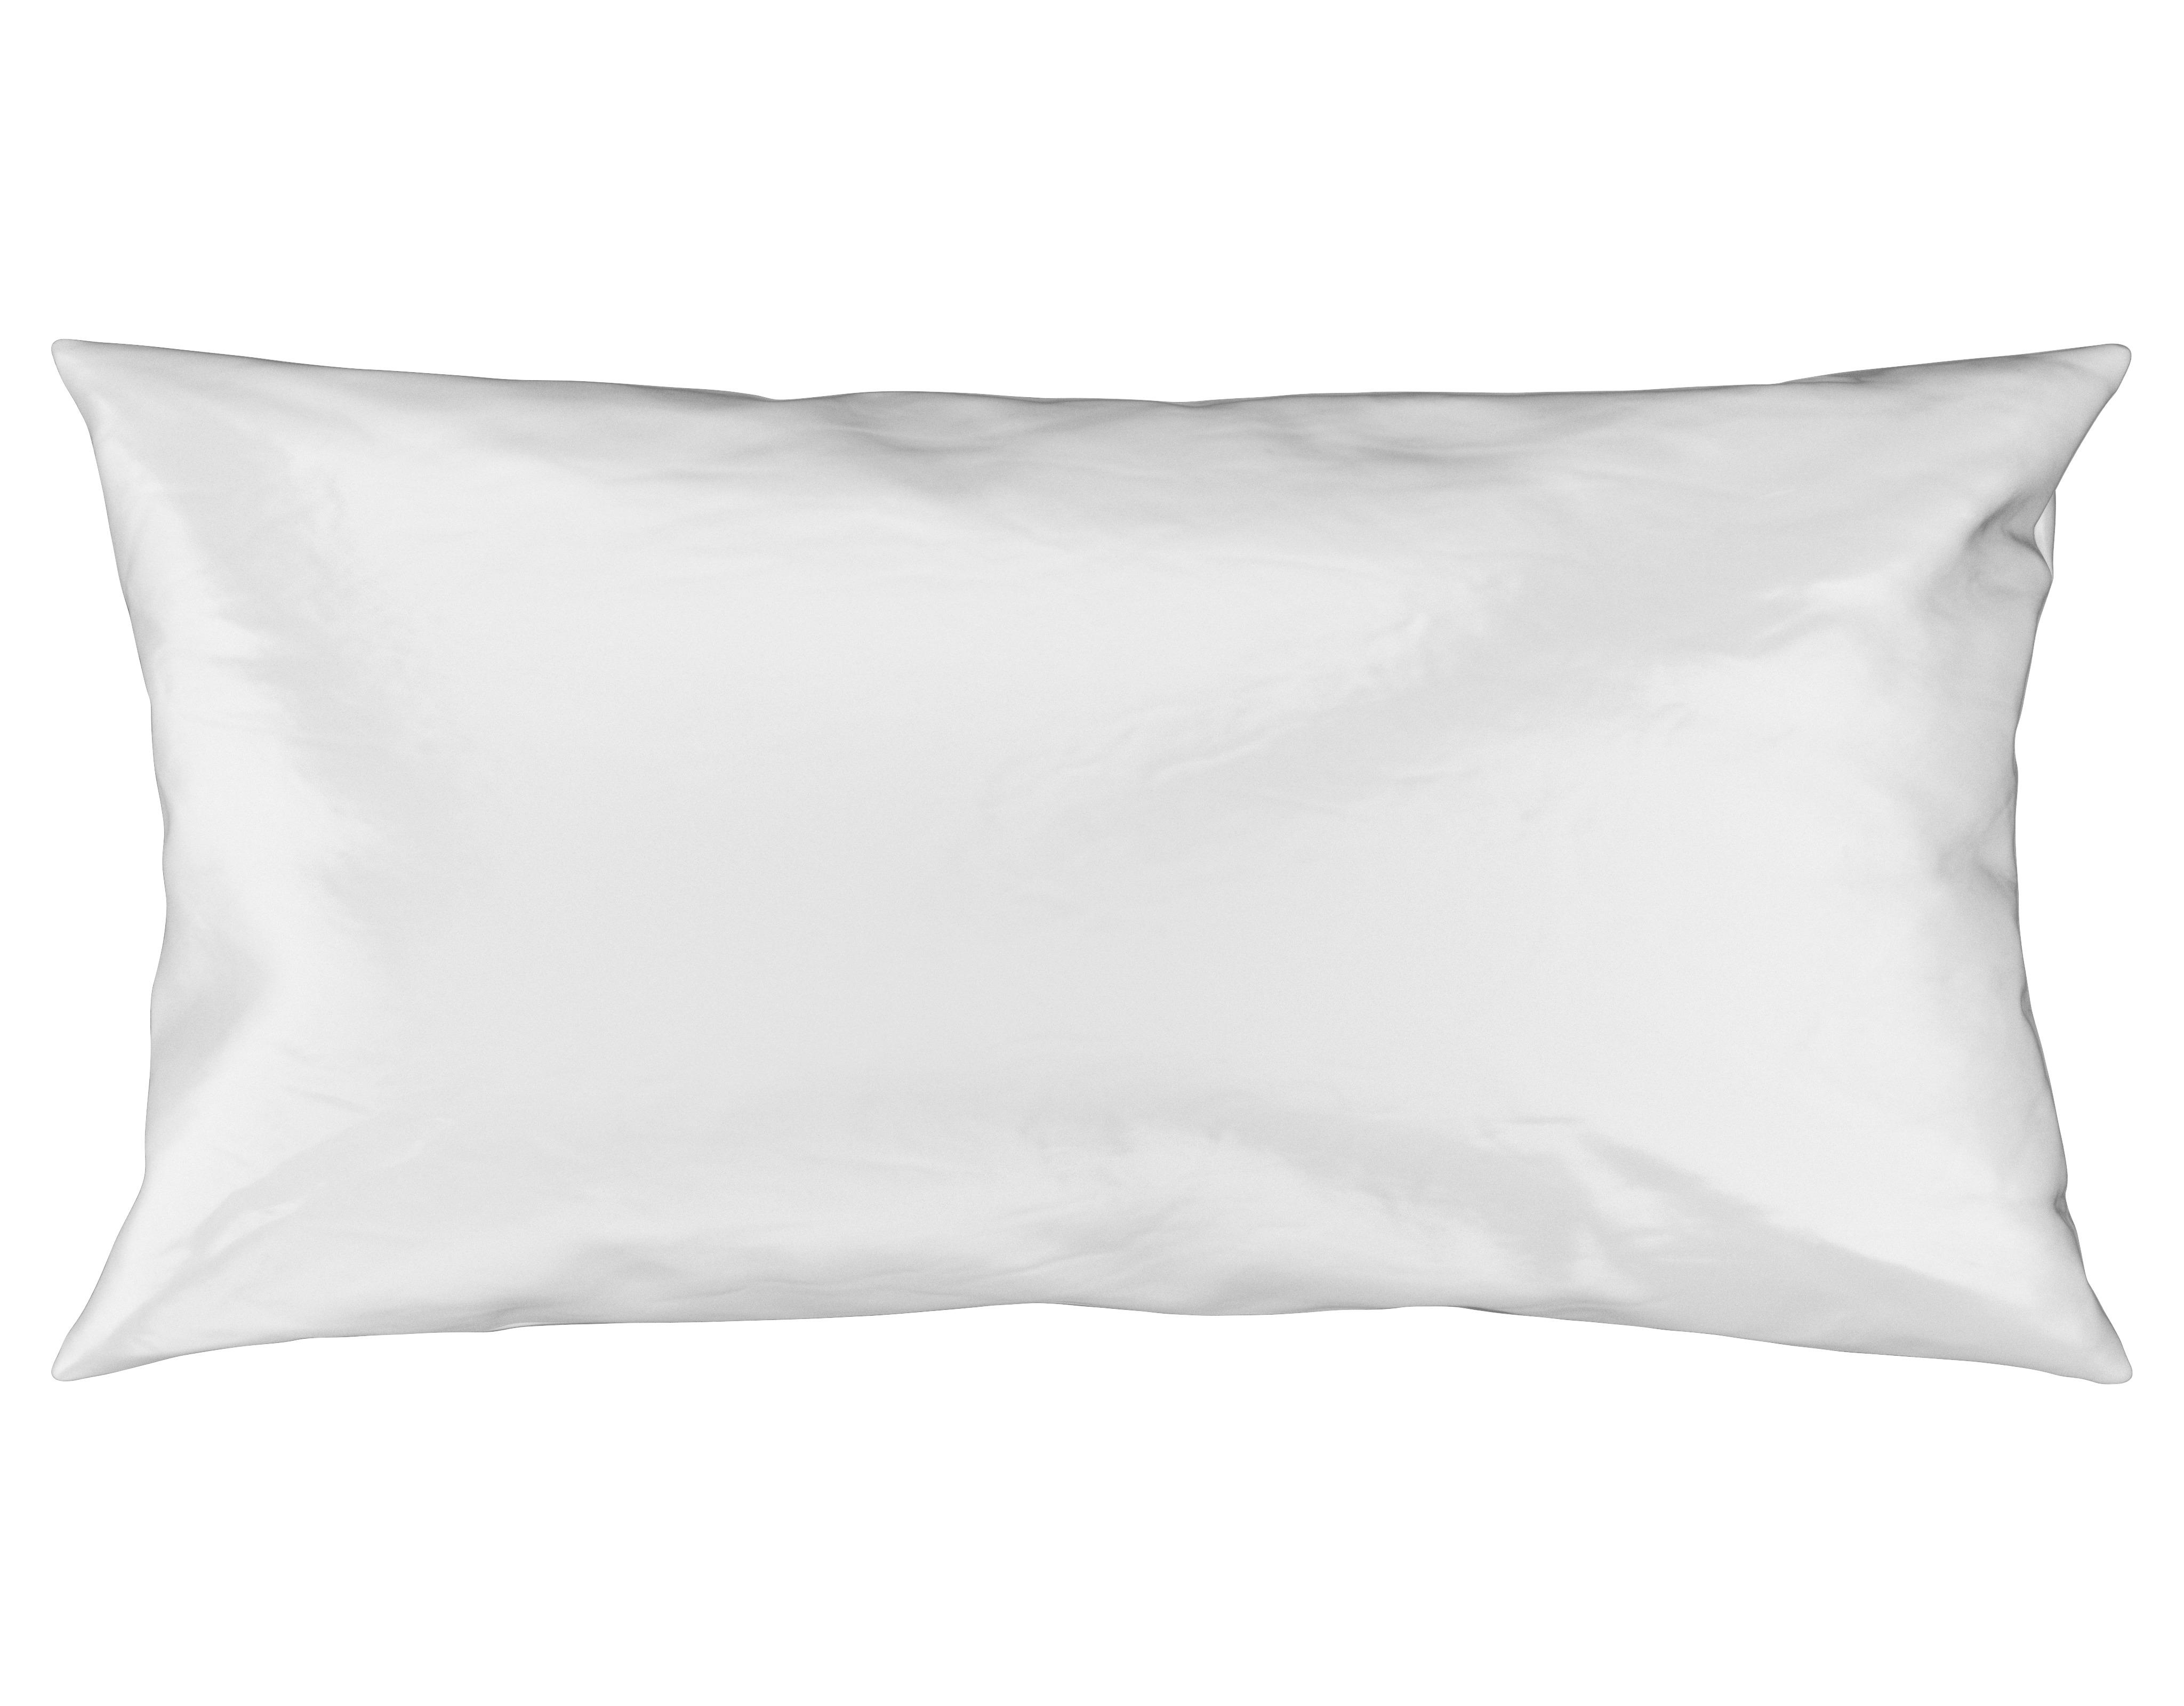 Kissenhülle Alex Uni in Weiß ca. 40x80cm - Weiß, MODERN, Textil (40/80cm) - Premium Living